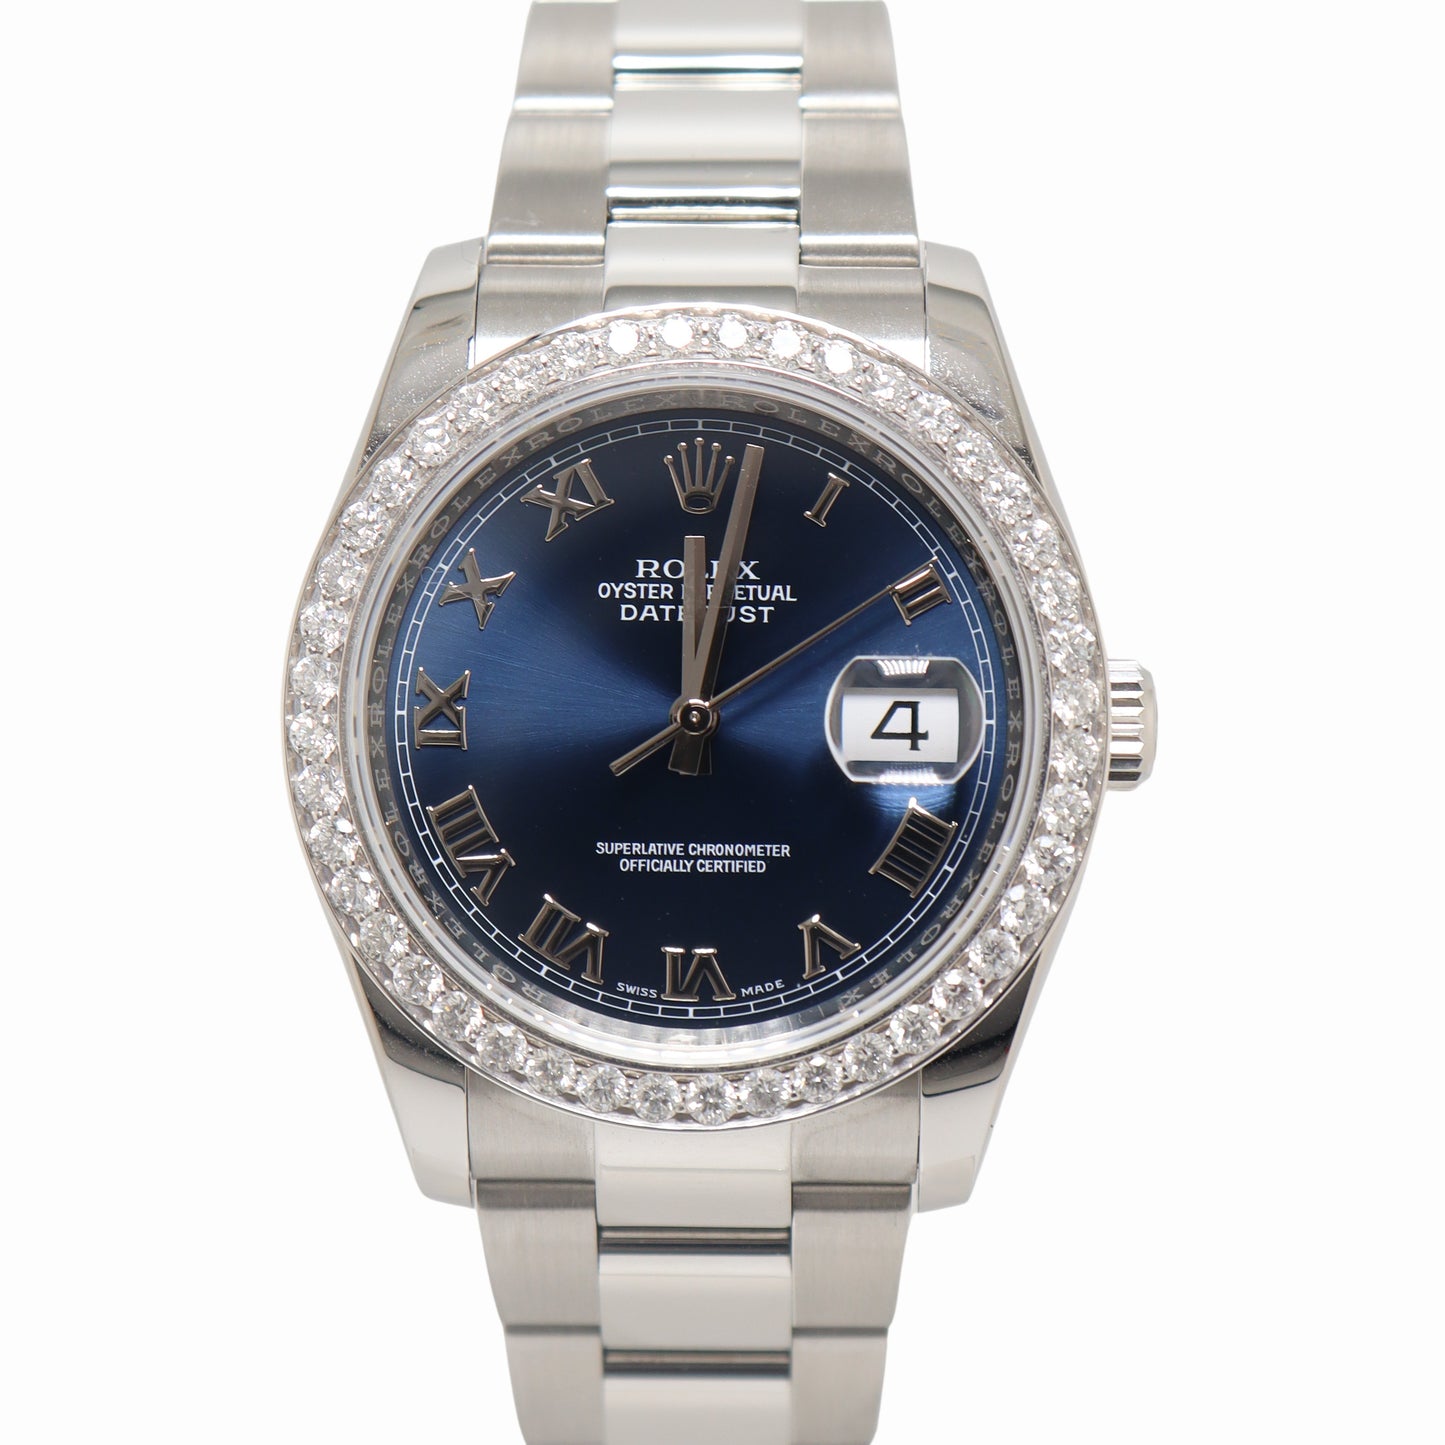 Rolex Datejust 36 Stainless Steel Blue Roman Dial Watch Reference# 116200 - Happy Jewelers Fine Jewelry Lifetime Warranty